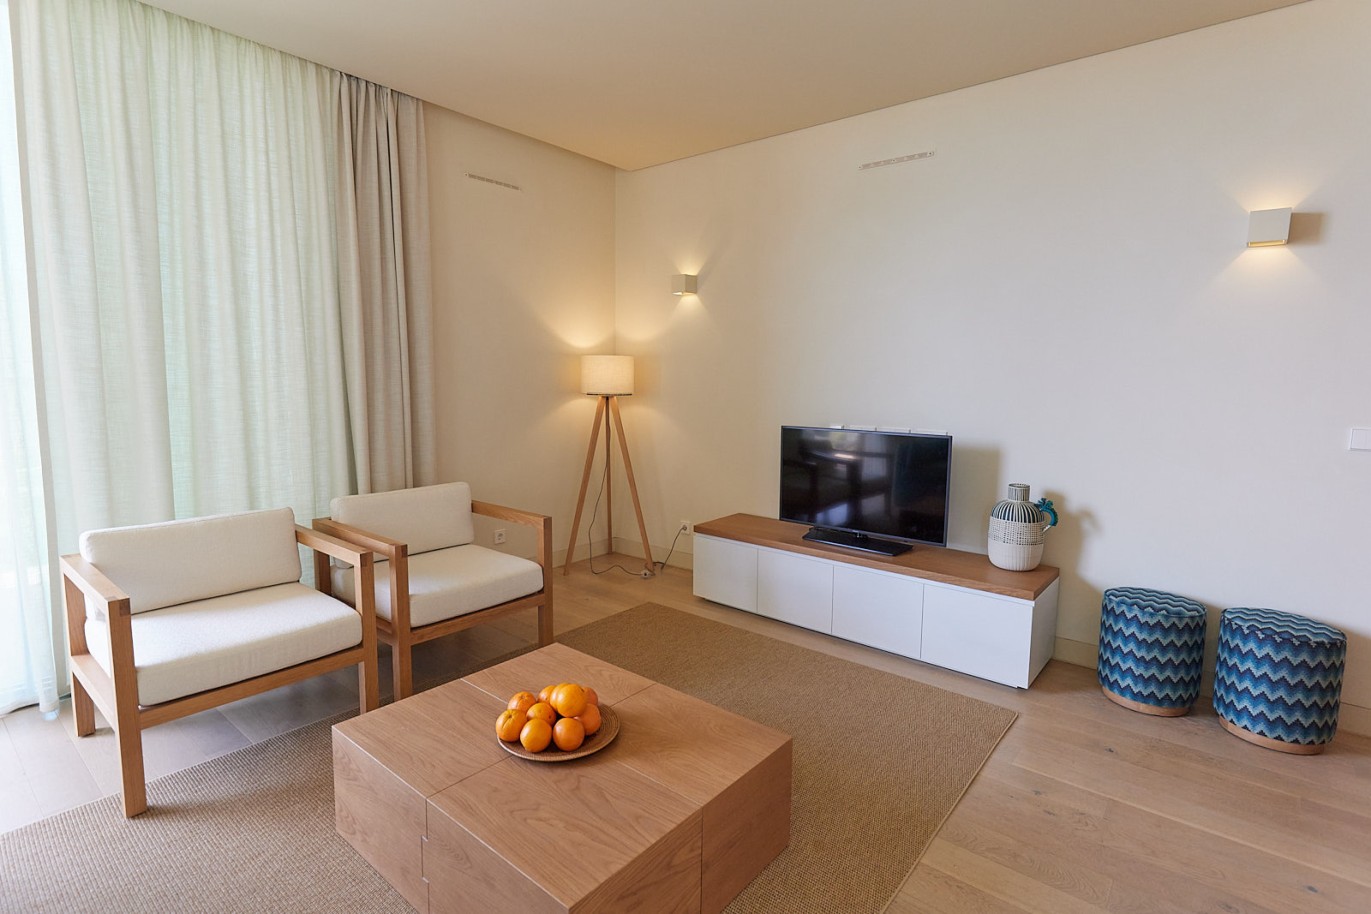 2 bedroom apartment in resort, for sale in Porches, Algarve_230780